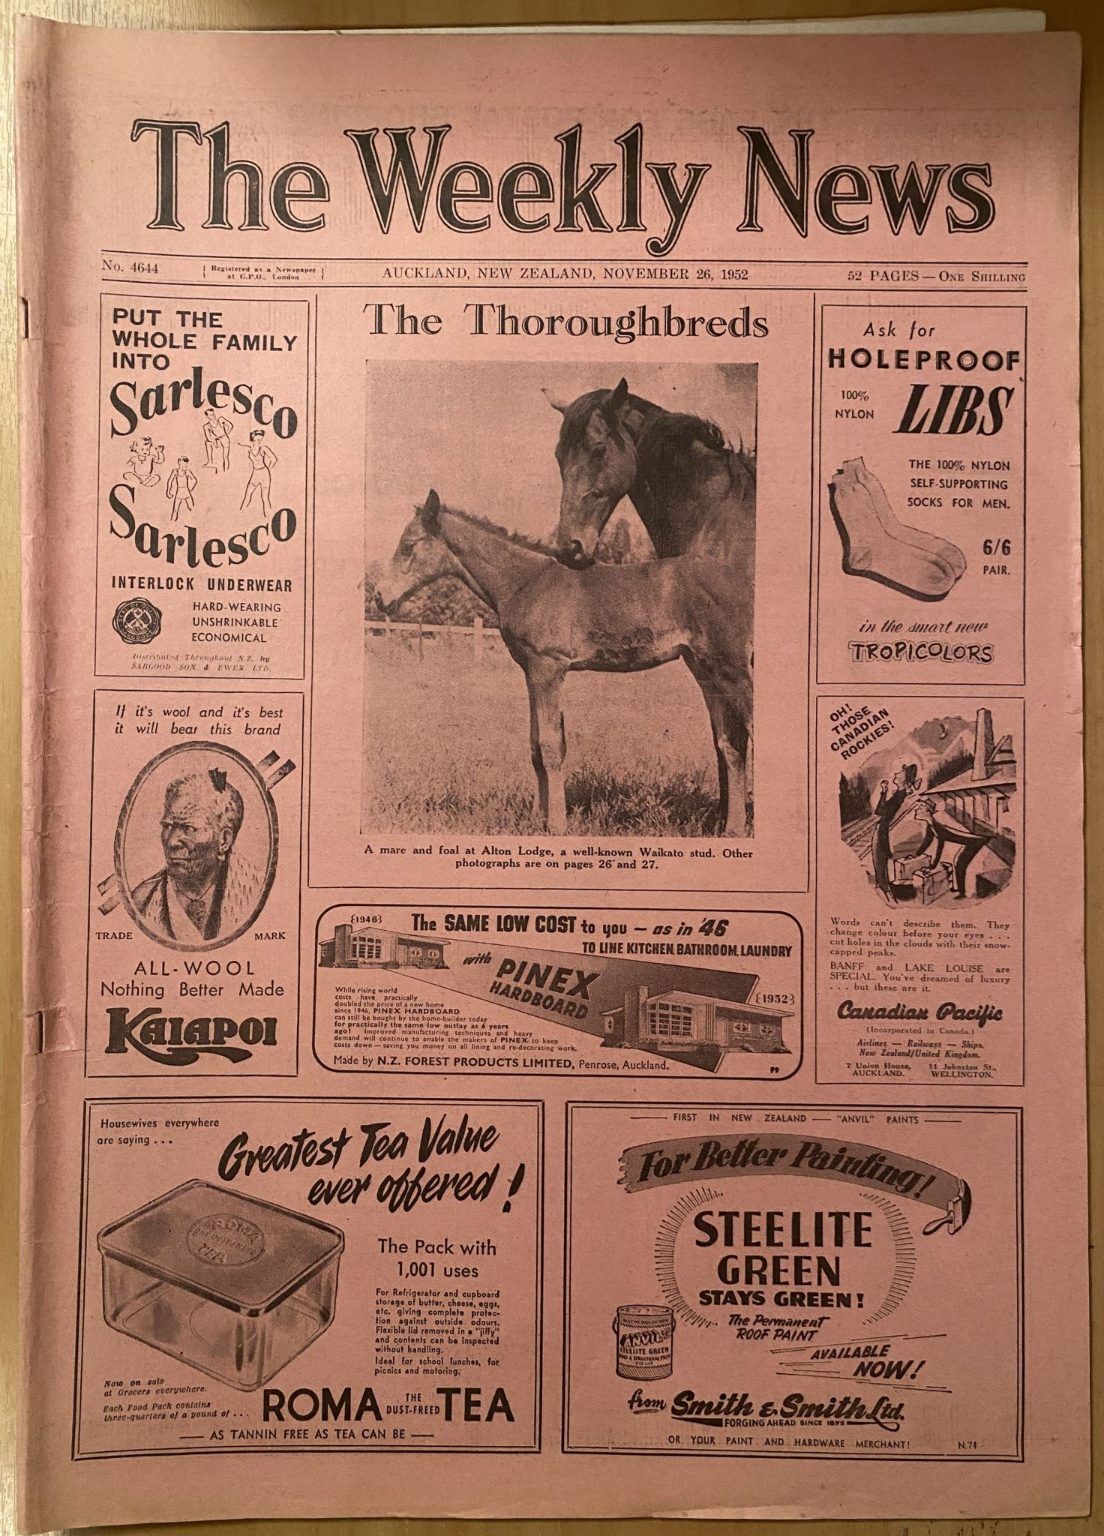 OLD NEWSPAPER: The Weekly News - No. 4644, 26 November 1952